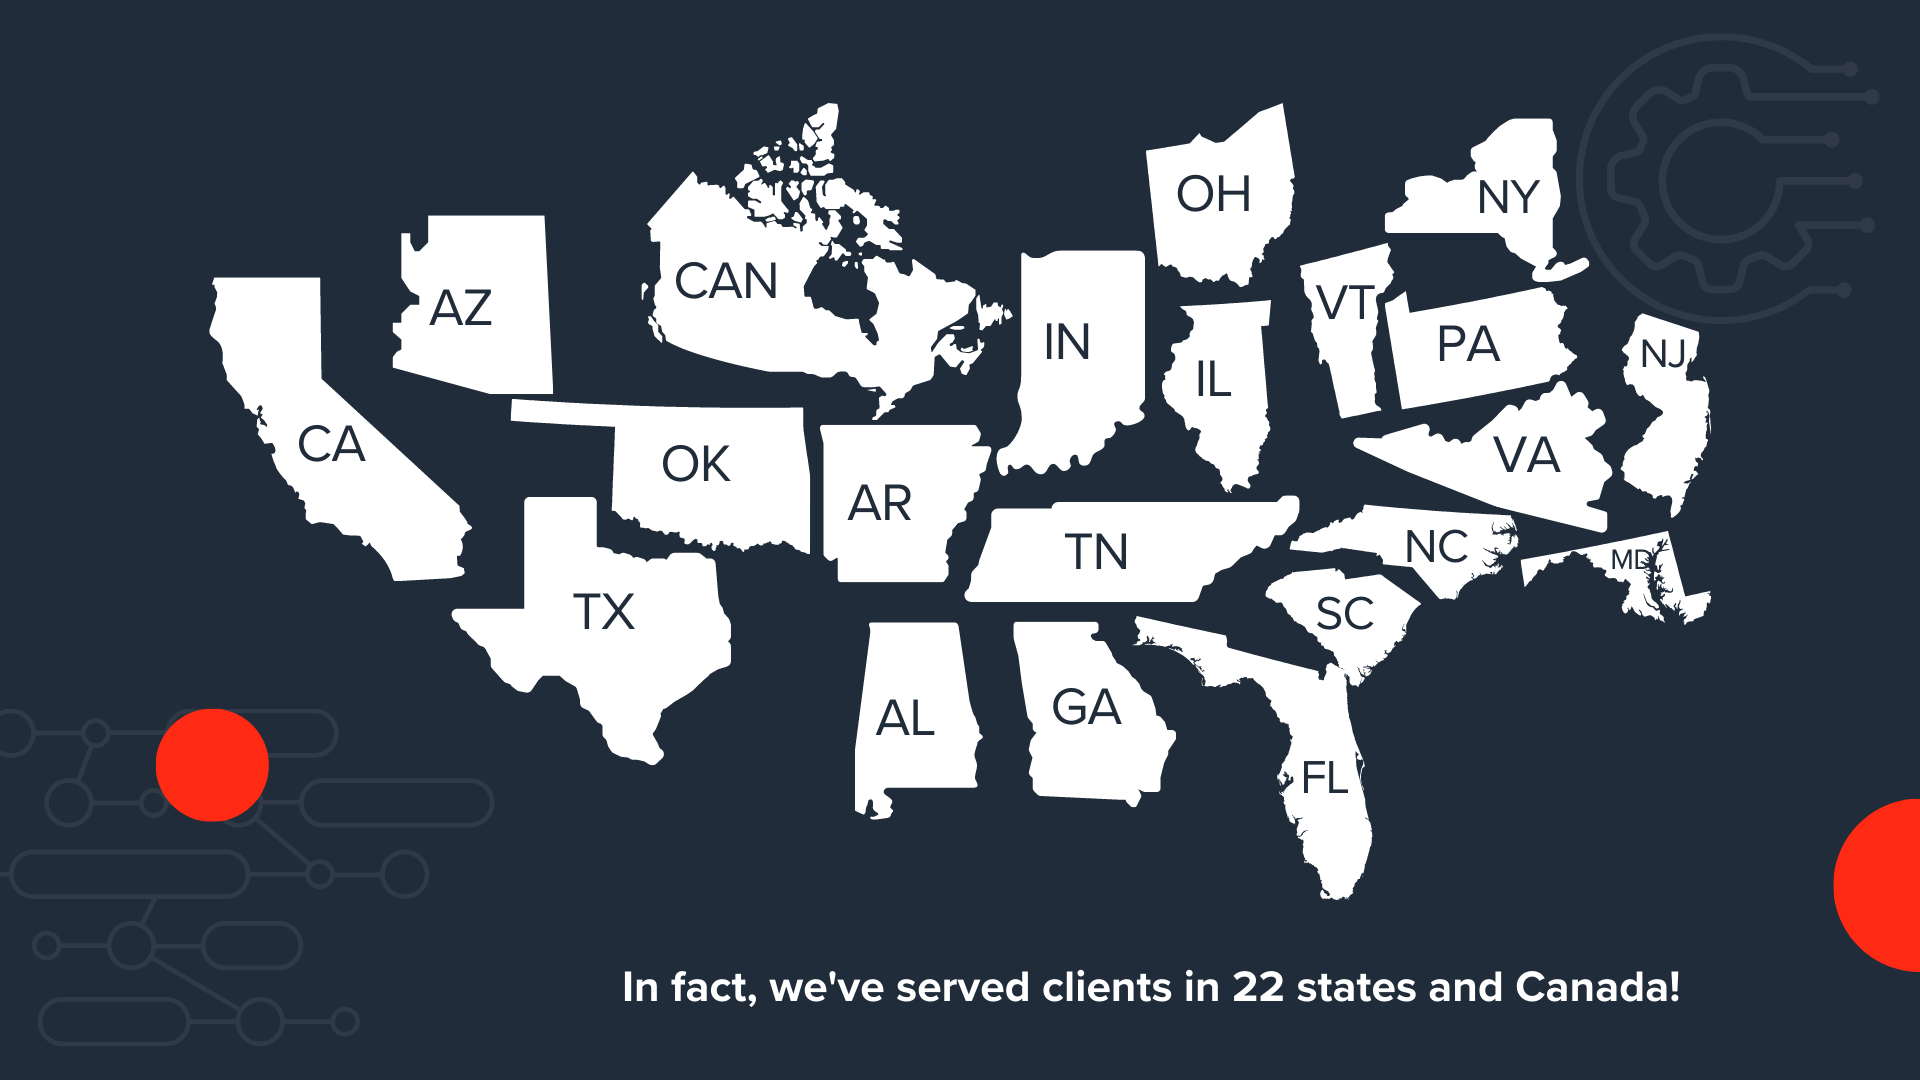 client states